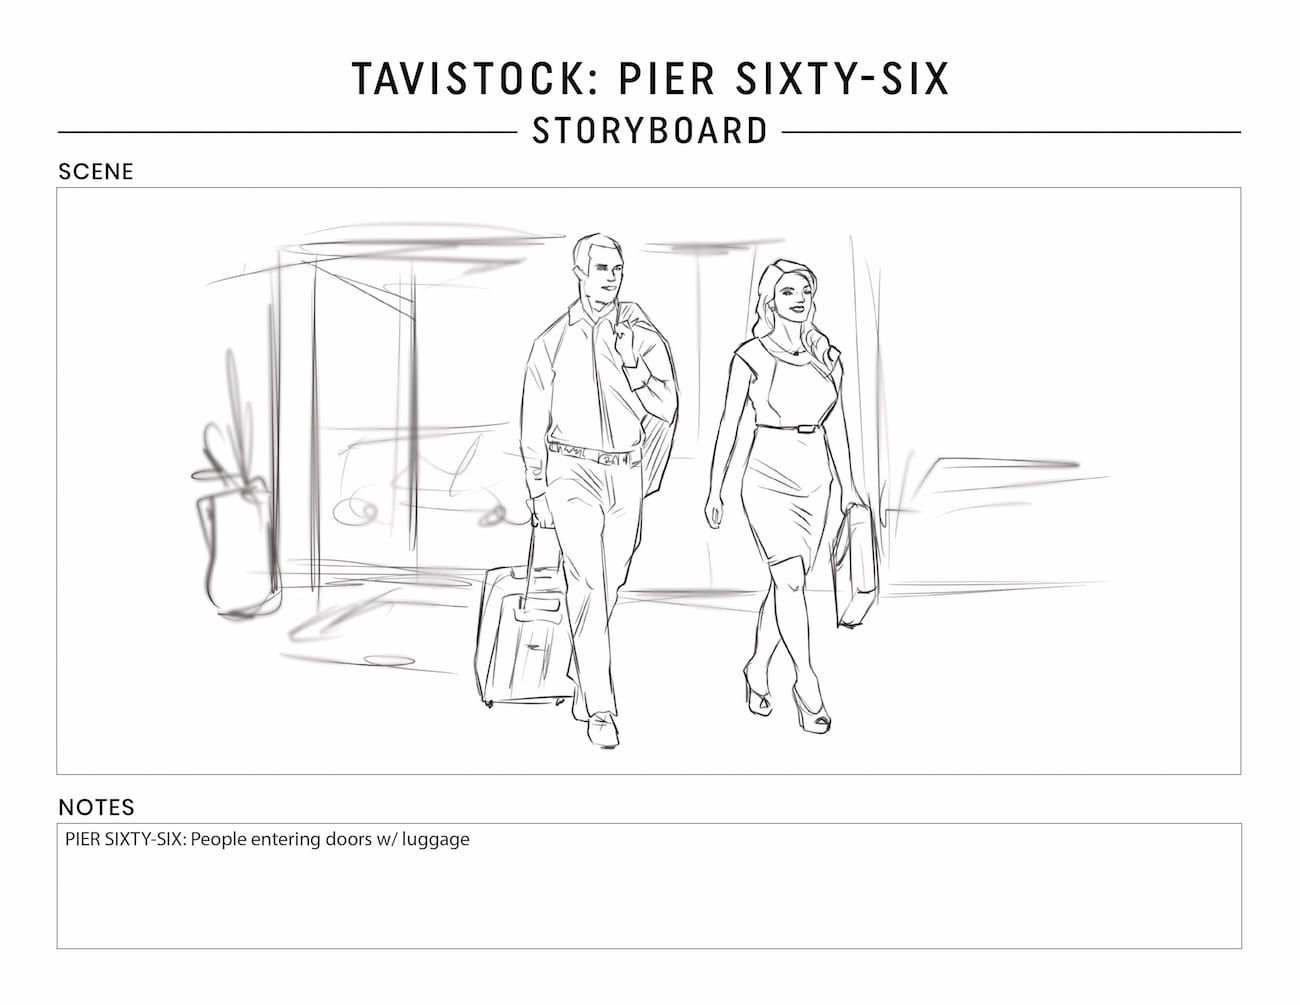 Tavistock Development Company C&I Studios Marketing Solutions Pier Sixty Six Storyboard People entering doors with luggage